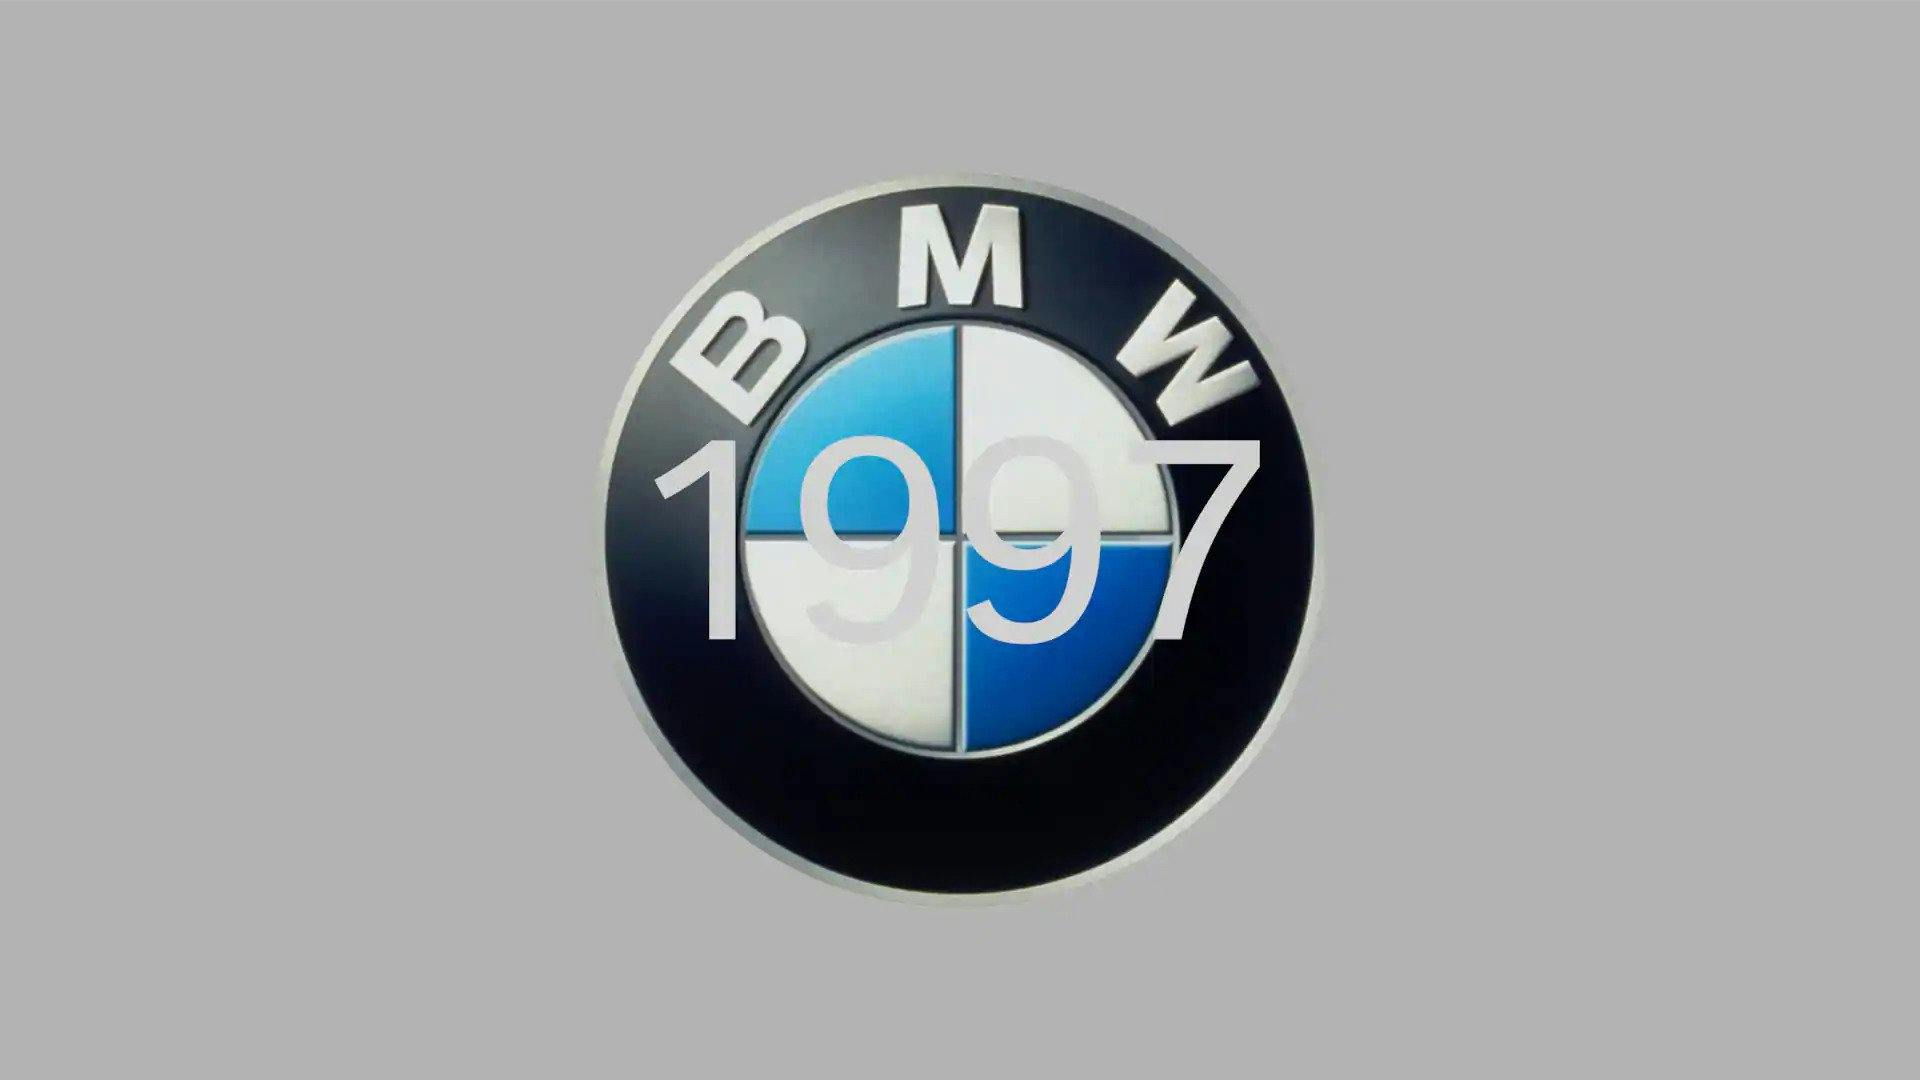 BMW 1997 logo design